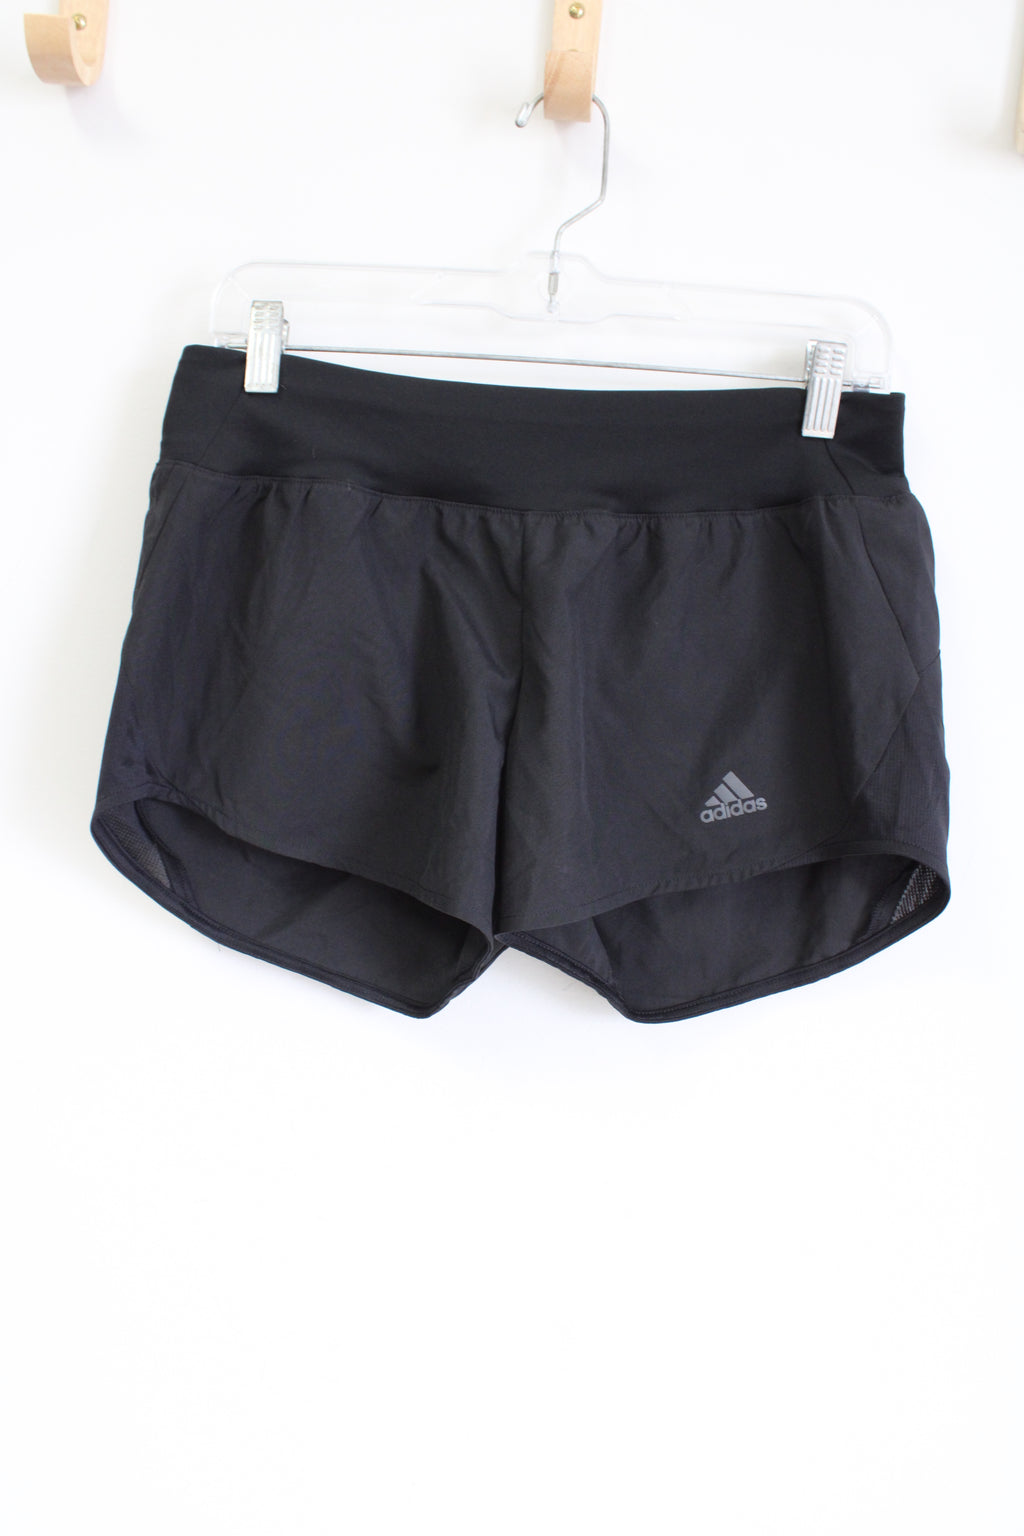 Adidas S3" Running Aeroready Black Shorts | S